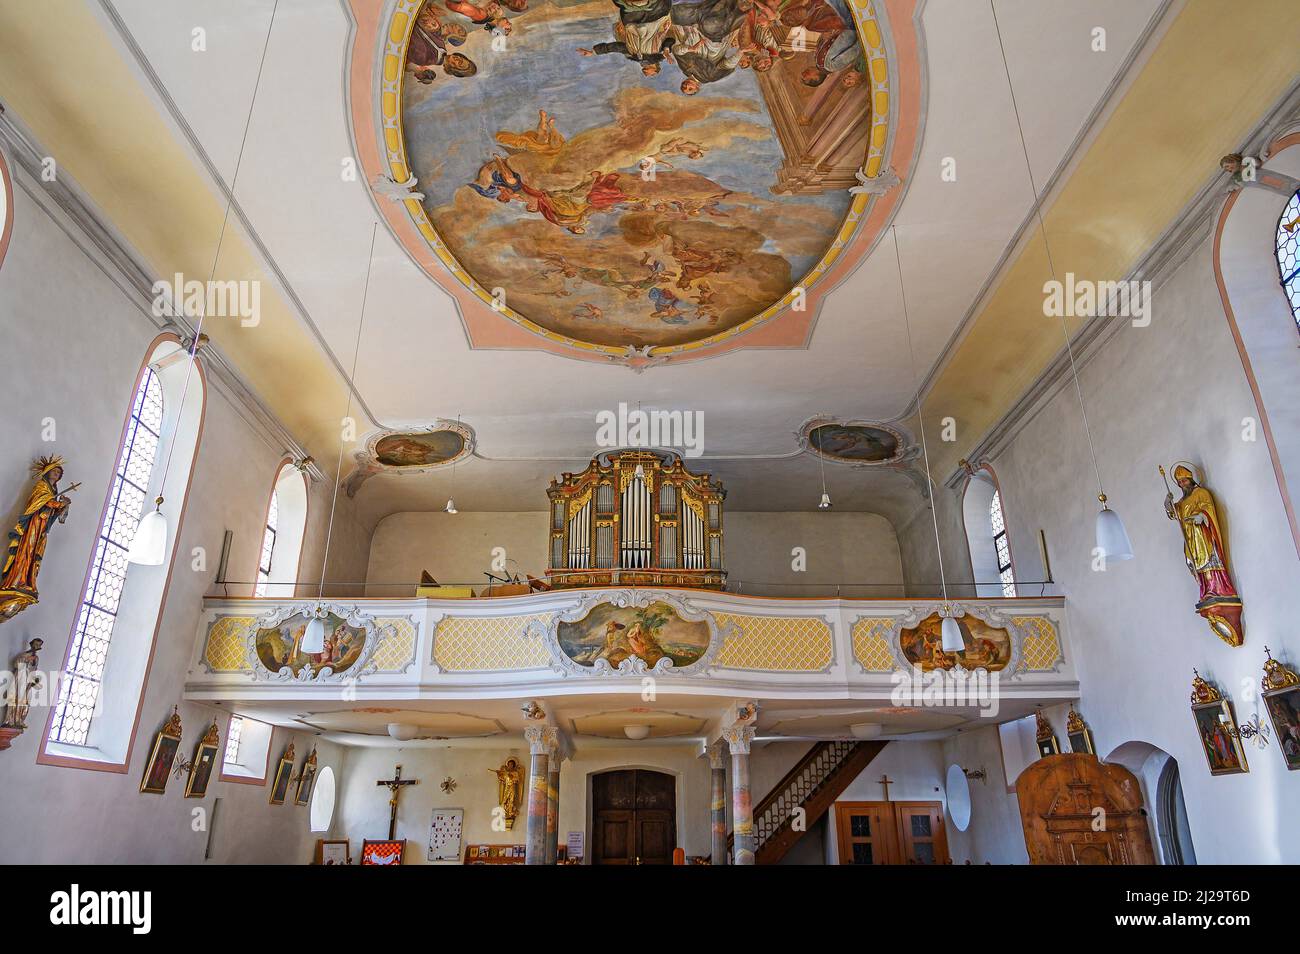 Organ gallery and ceiling frescoes, St. Afra Catholic Parish Church, Betzigau, Allgaeu, Bavaria, Germany Stock Photo